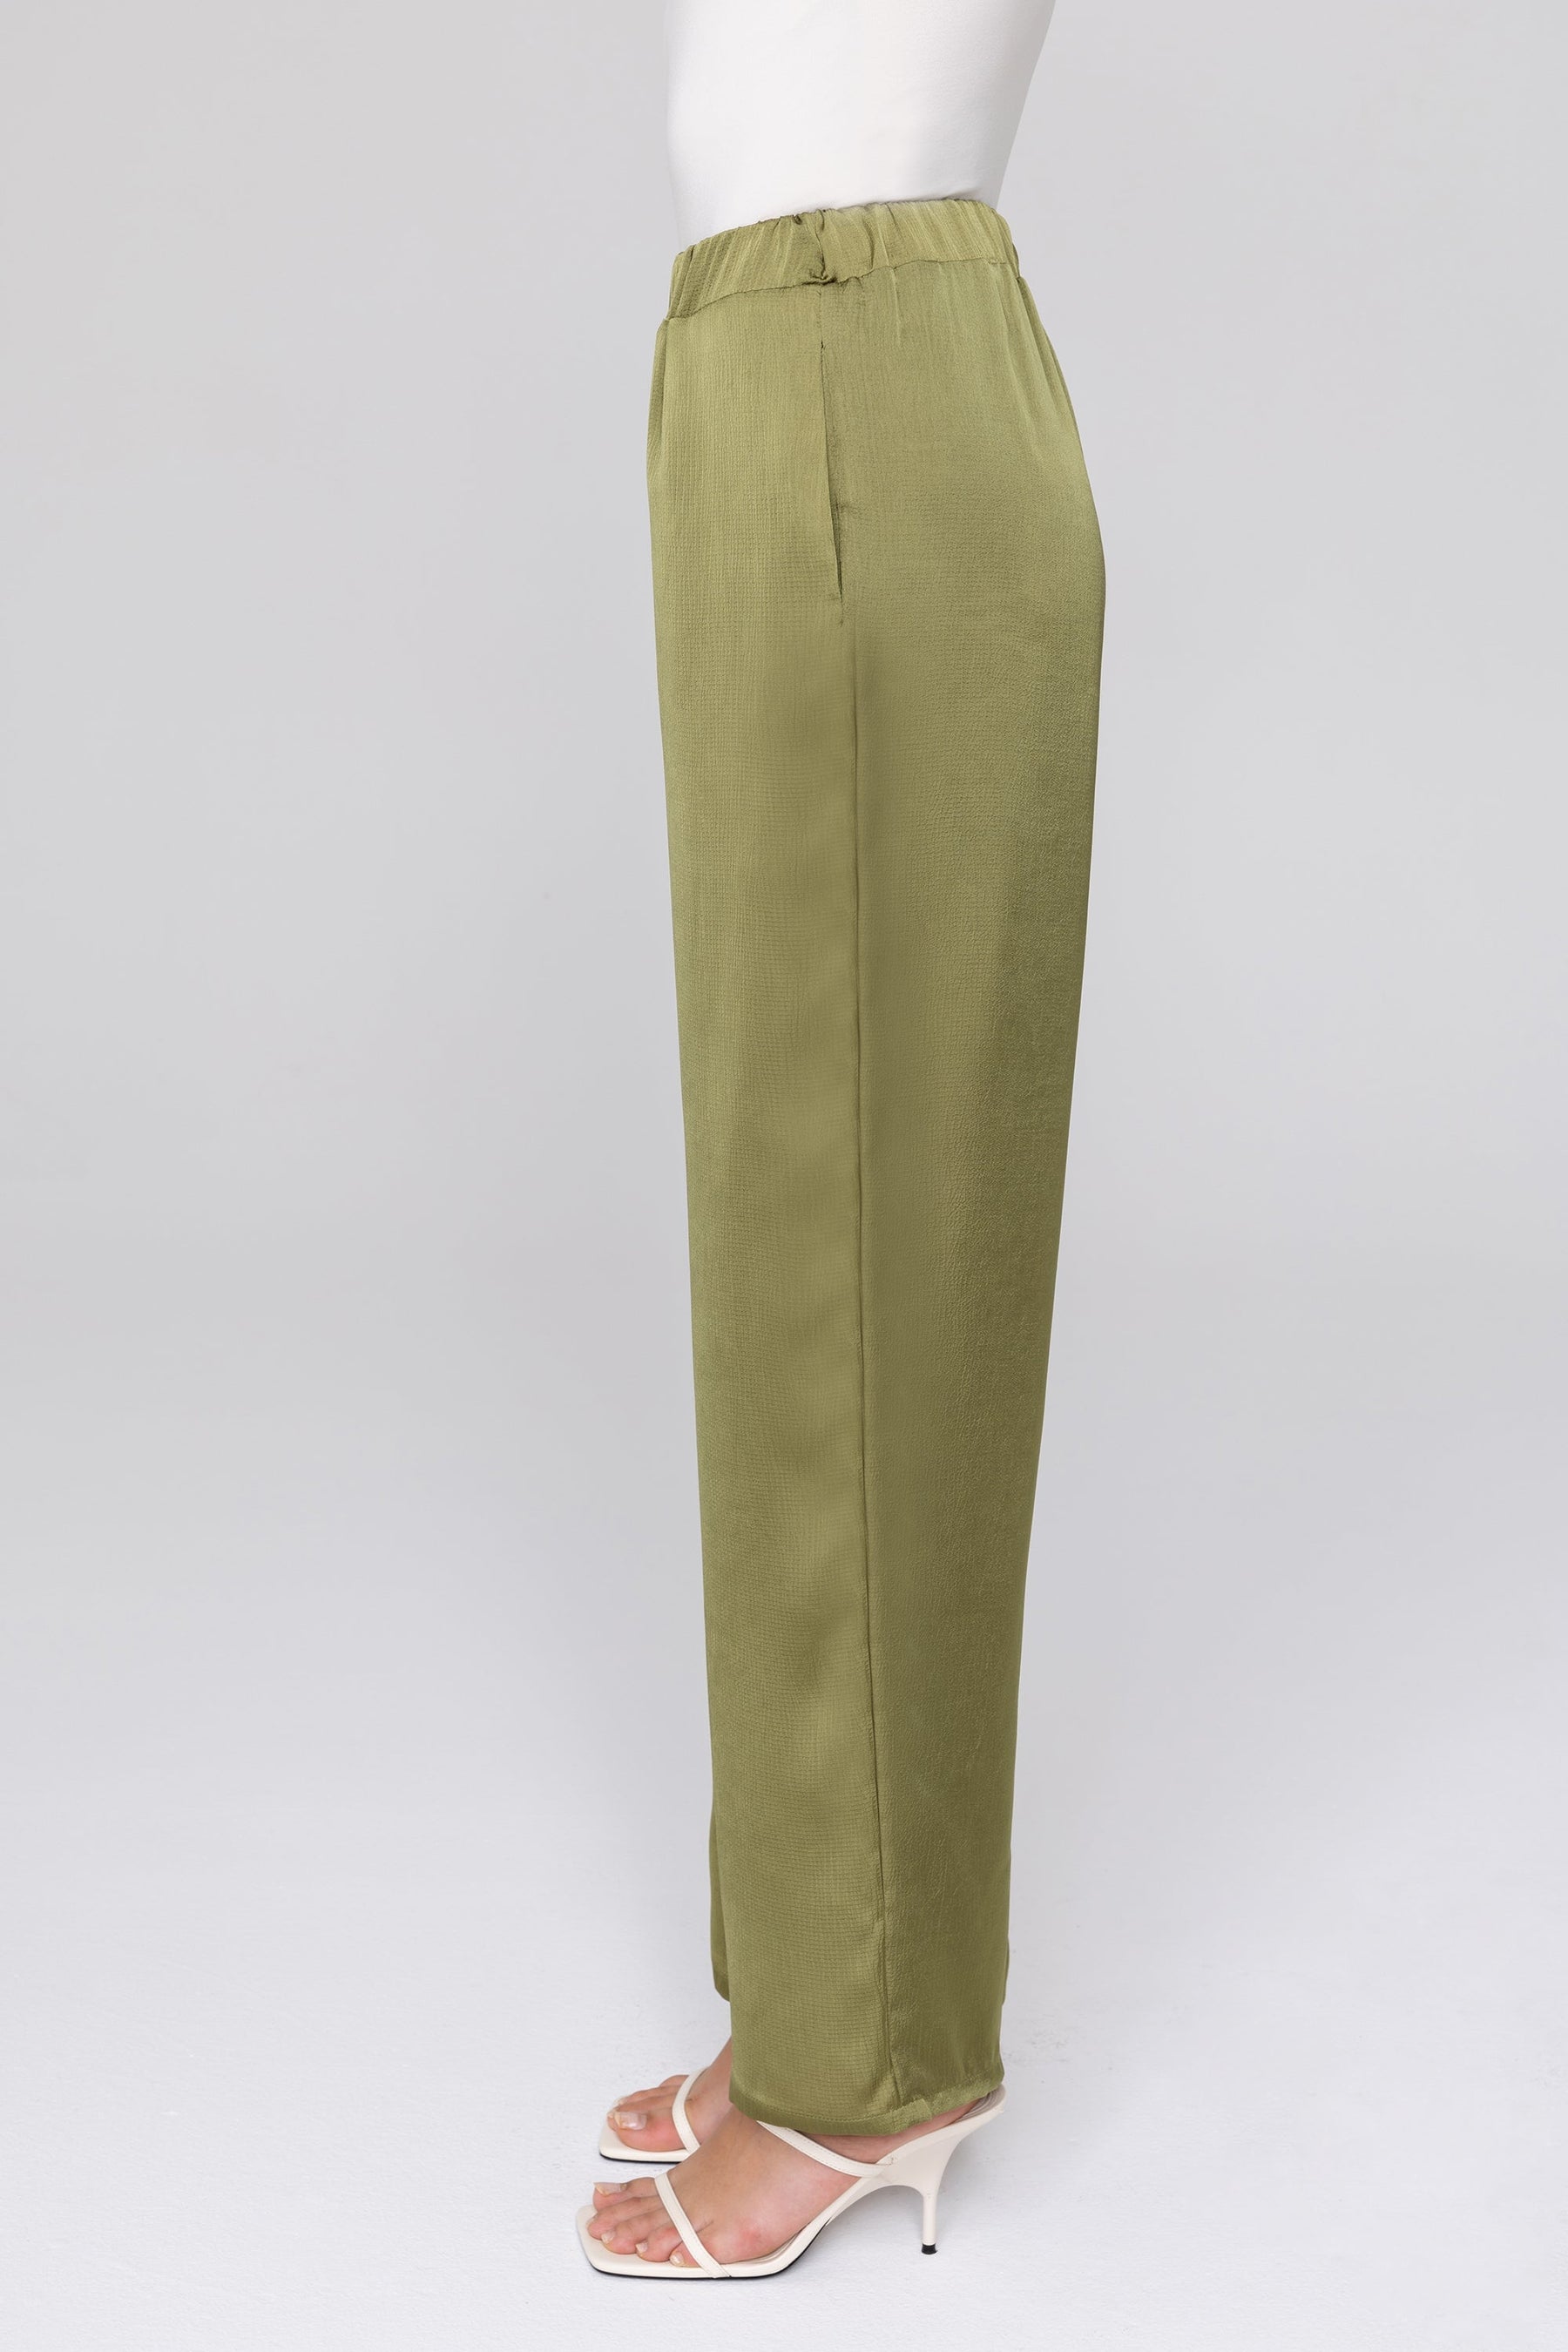 Katia Textured Wide Leg Pants - Avocado epschoolboard 